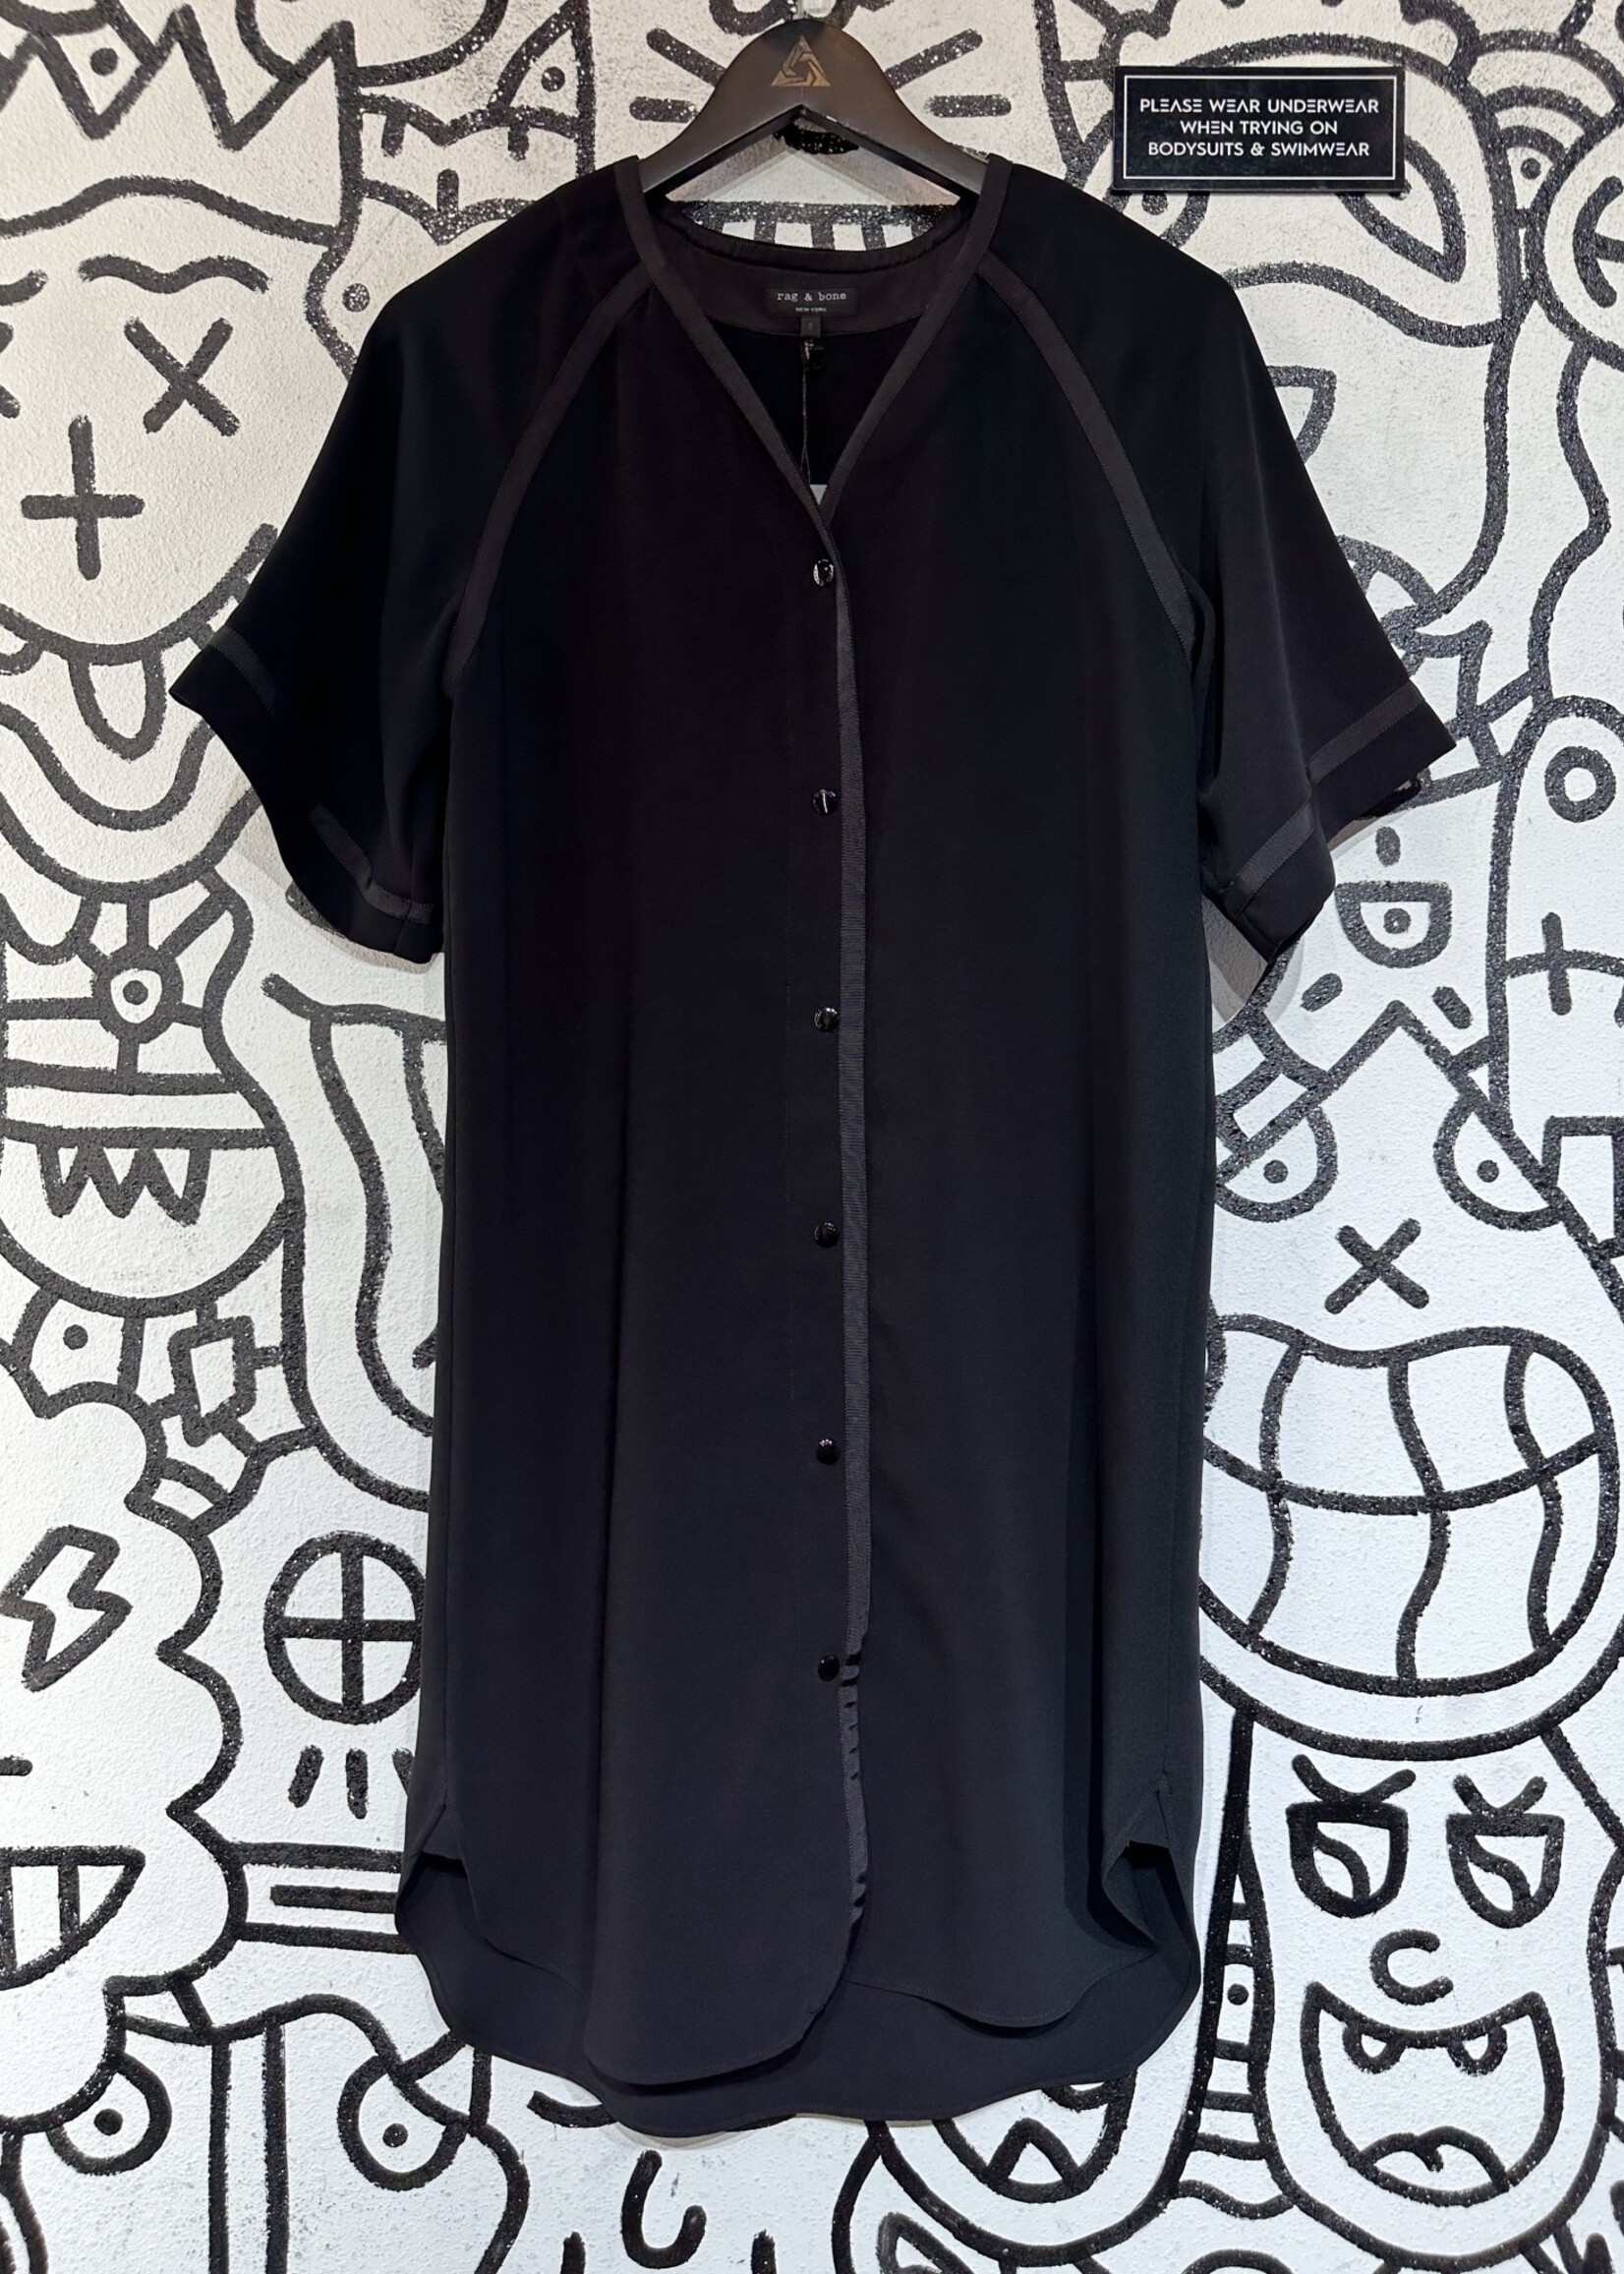 Rag & Bone Black Short Sleeve Button Up Dress S